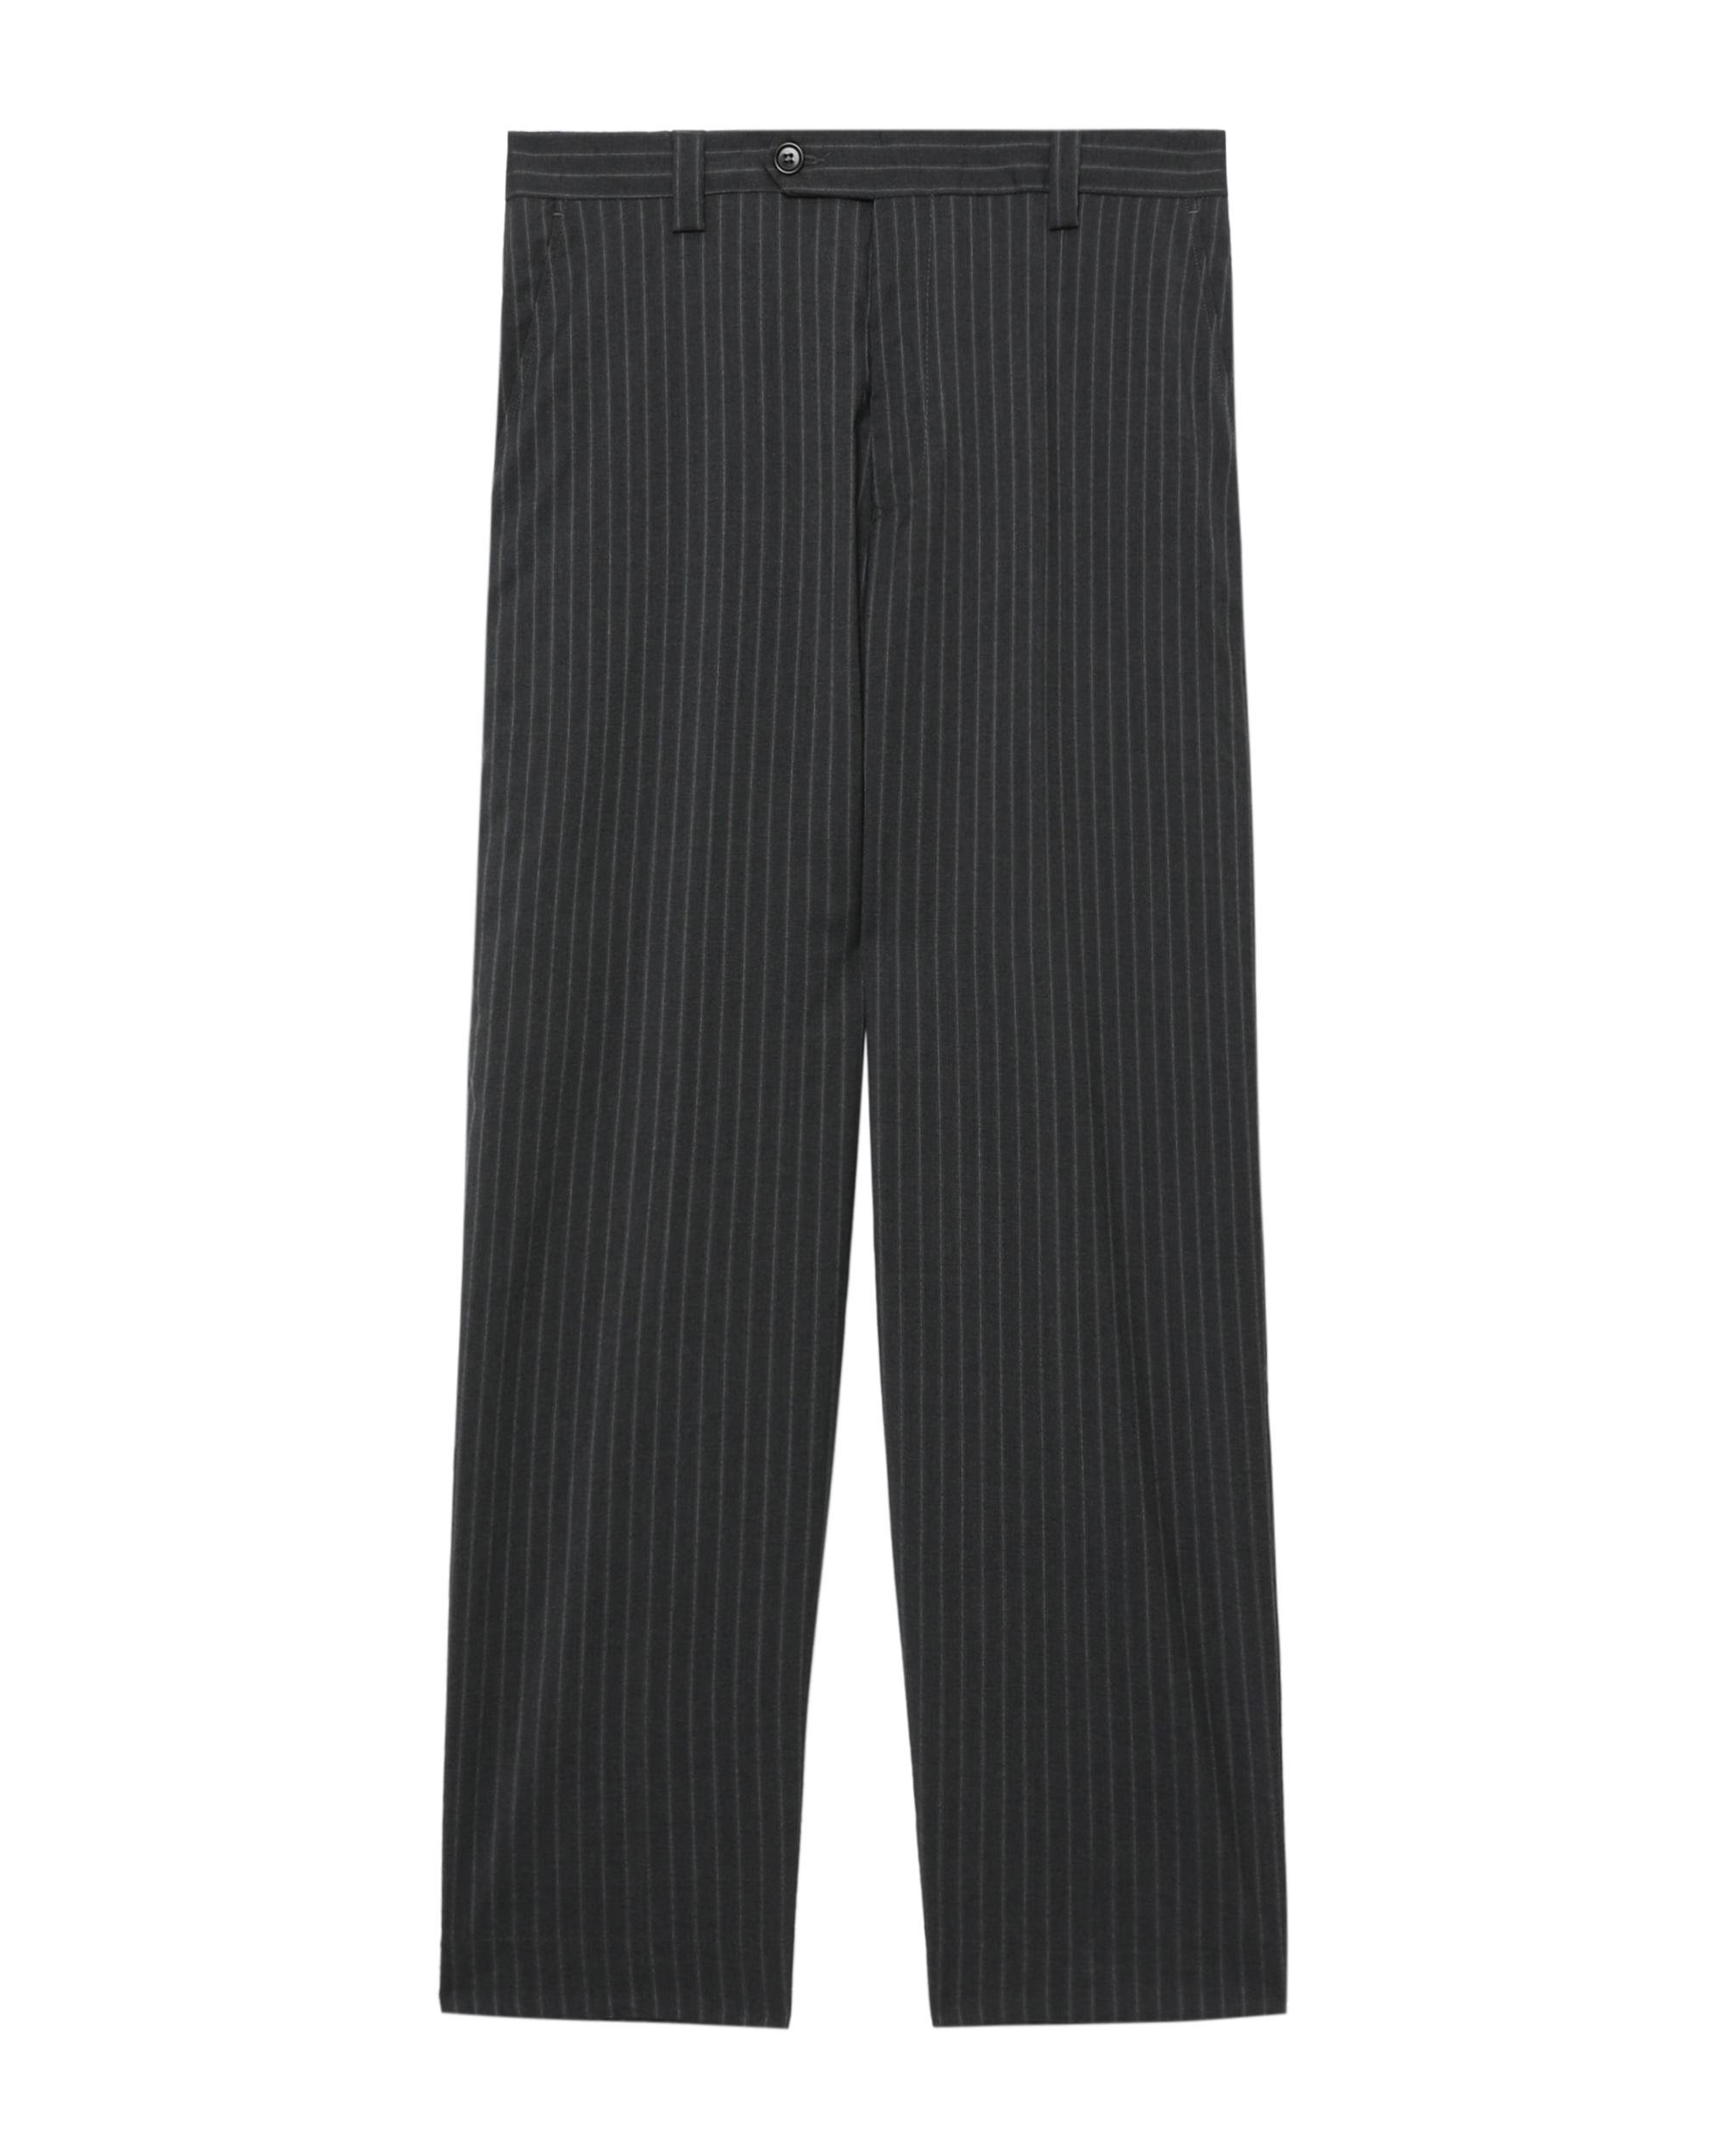 Striped suit pants by MFPEN